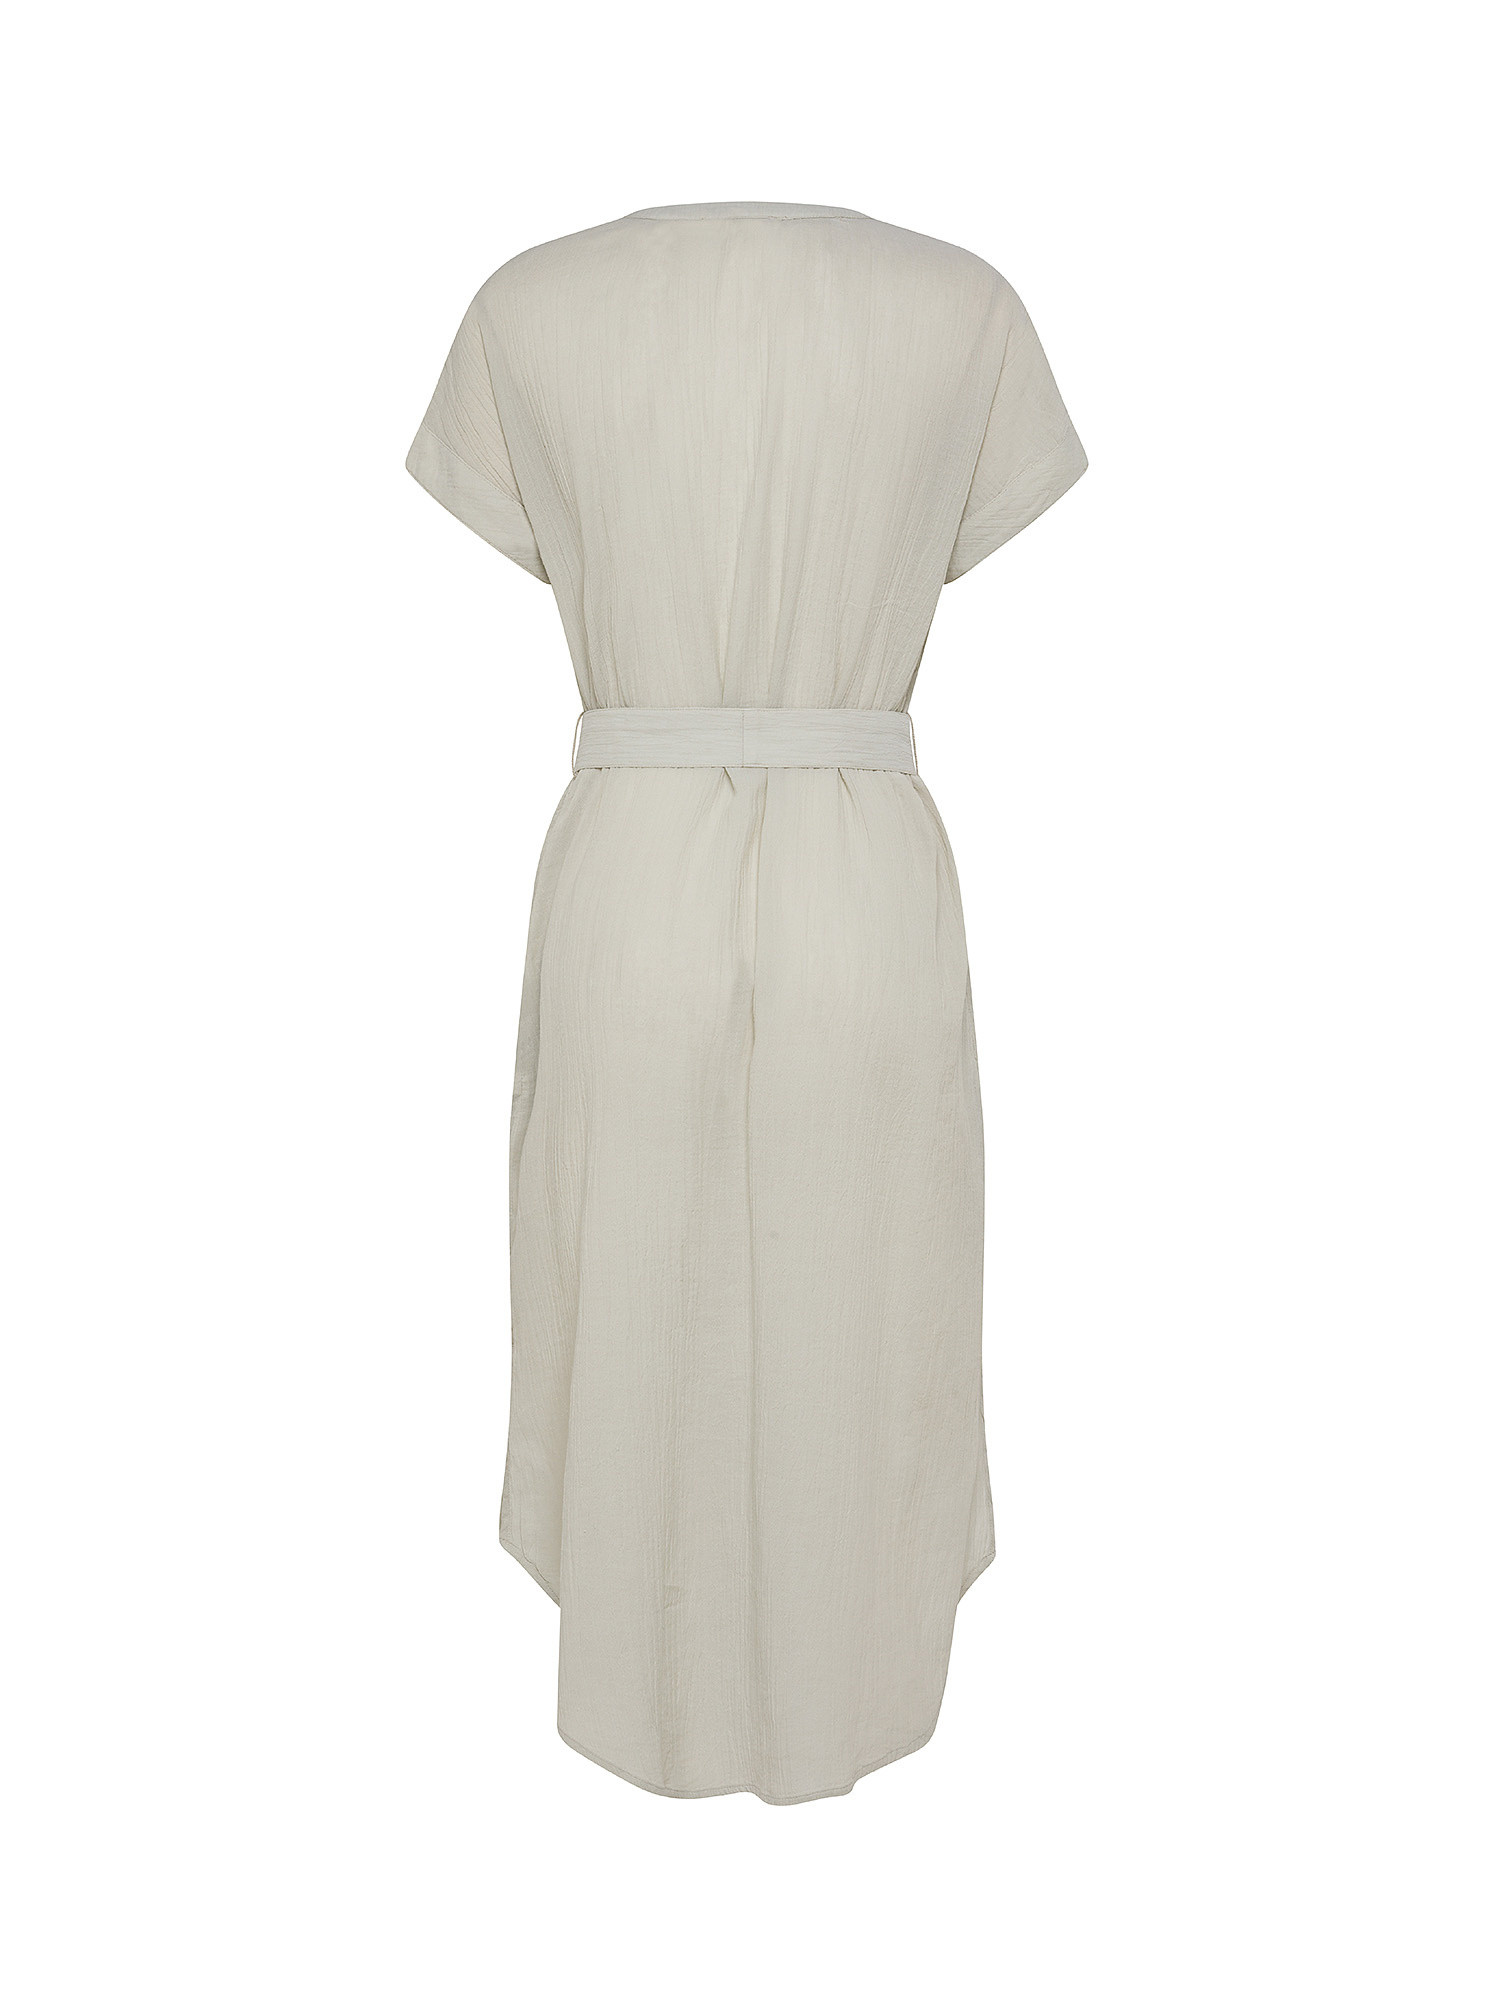 Esprit - Cotton midi dress with belt, Light Beige, large image number 1